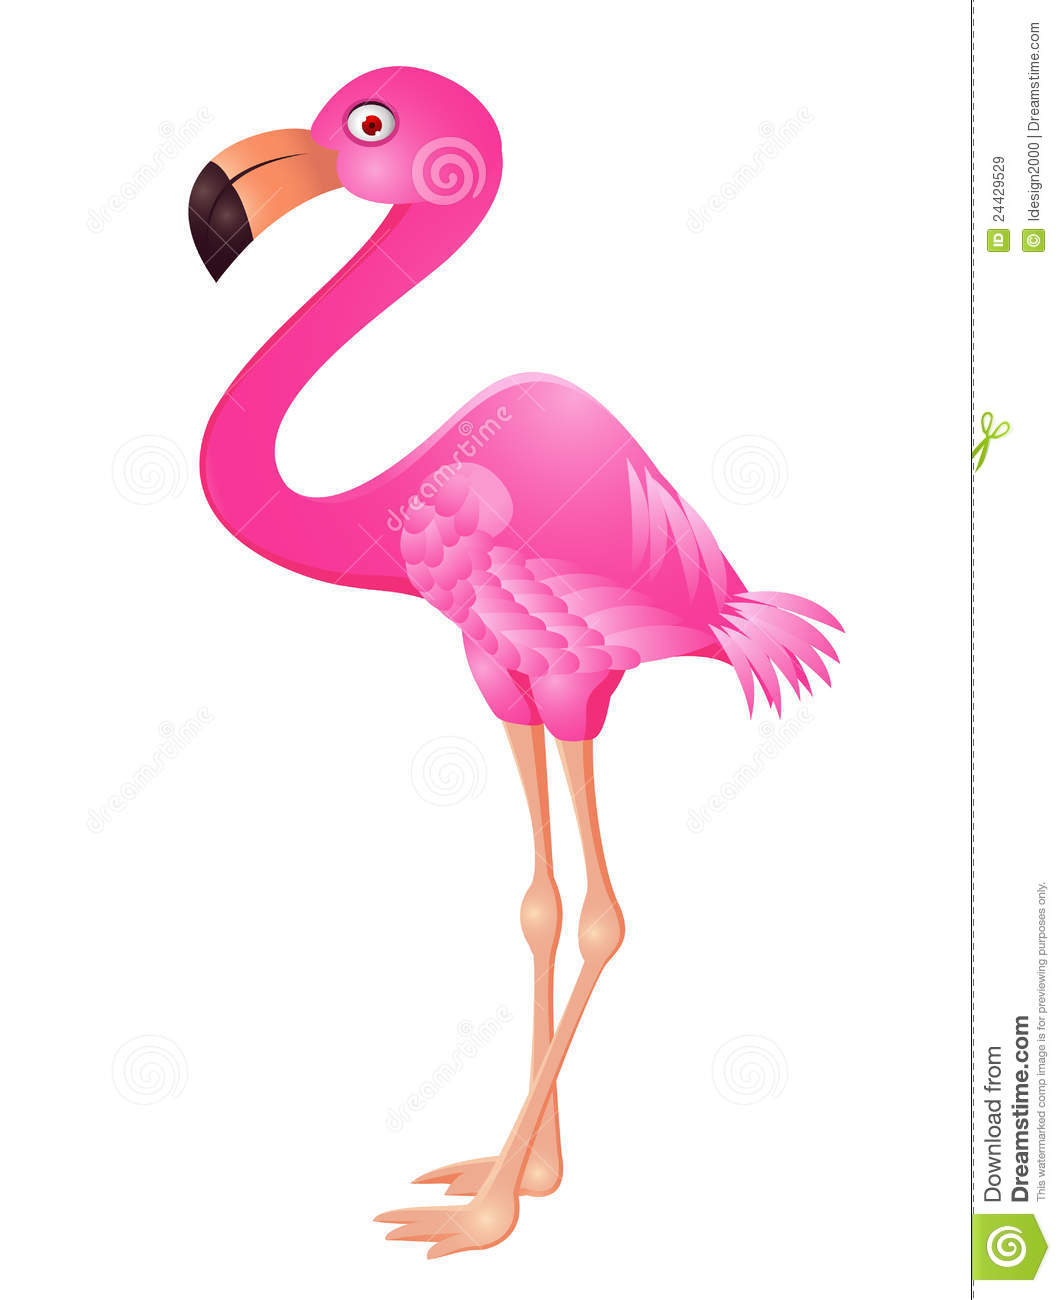 Royalty Free Stock Images  Funny Flamingo Cartoon  Image  24429529